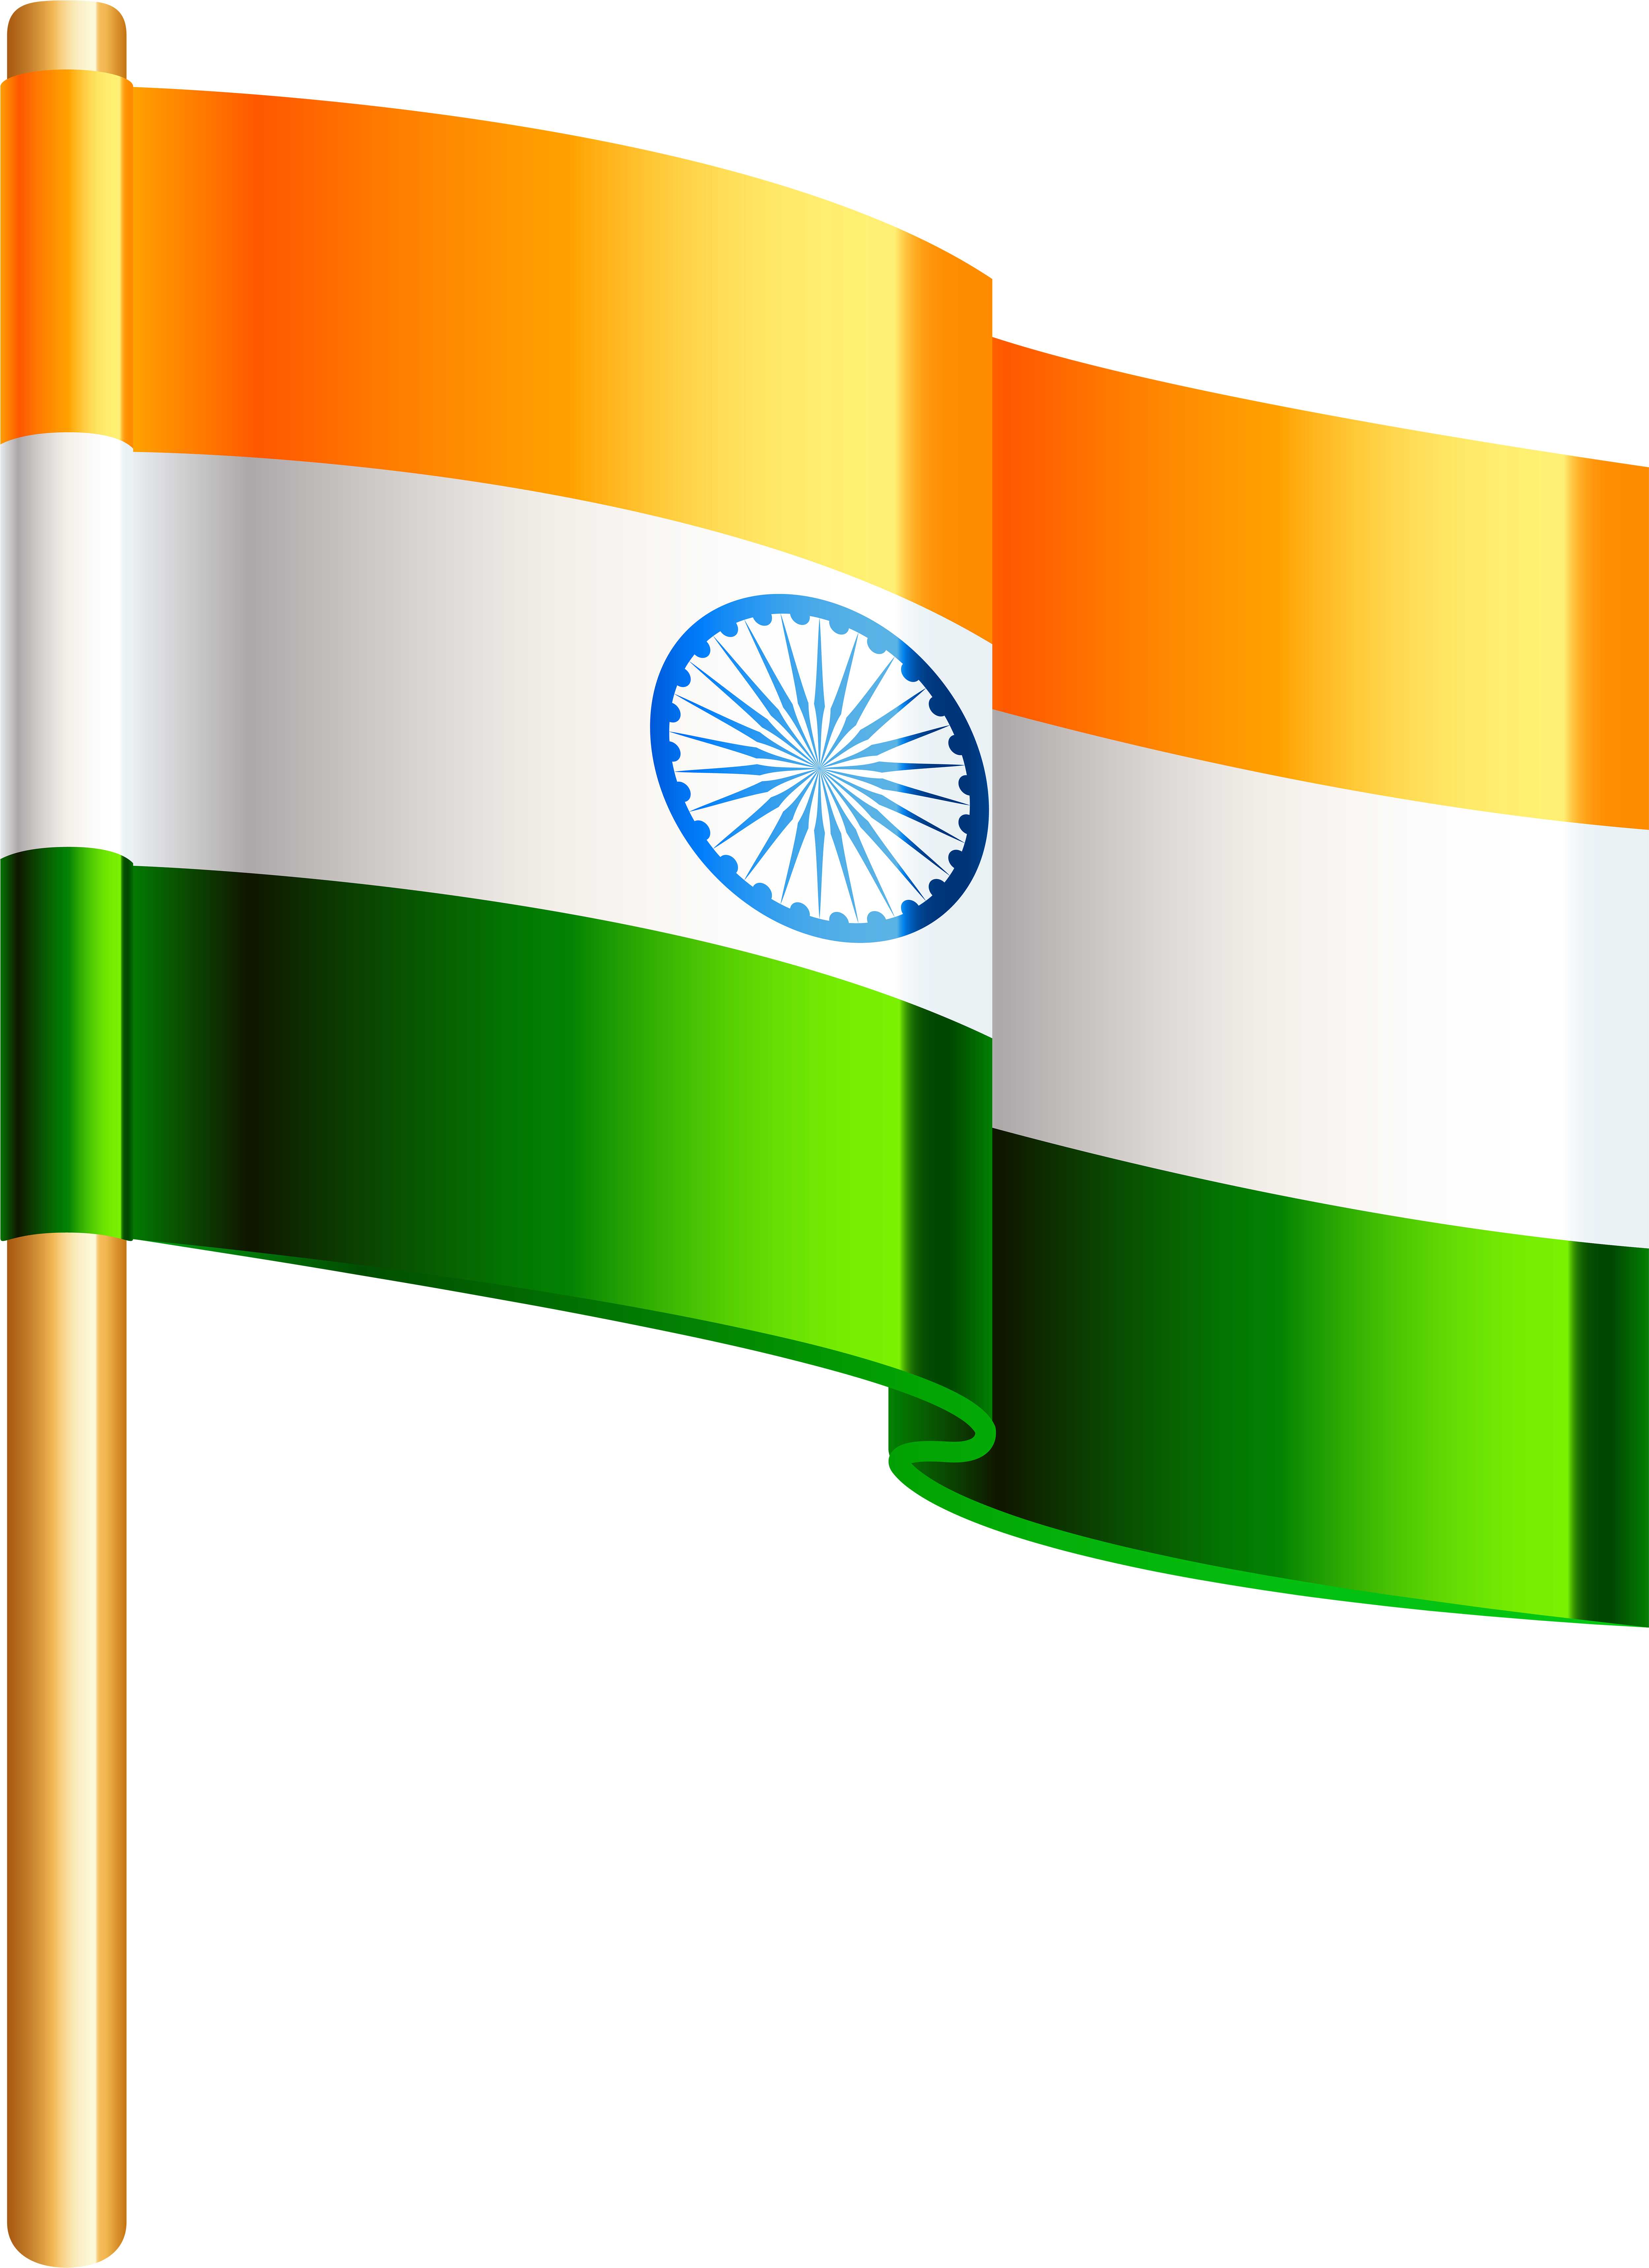 Tricolour Indian Flag Vector in Illustrator, SVG, JPG, EPS, PNG - Download  | Template.net